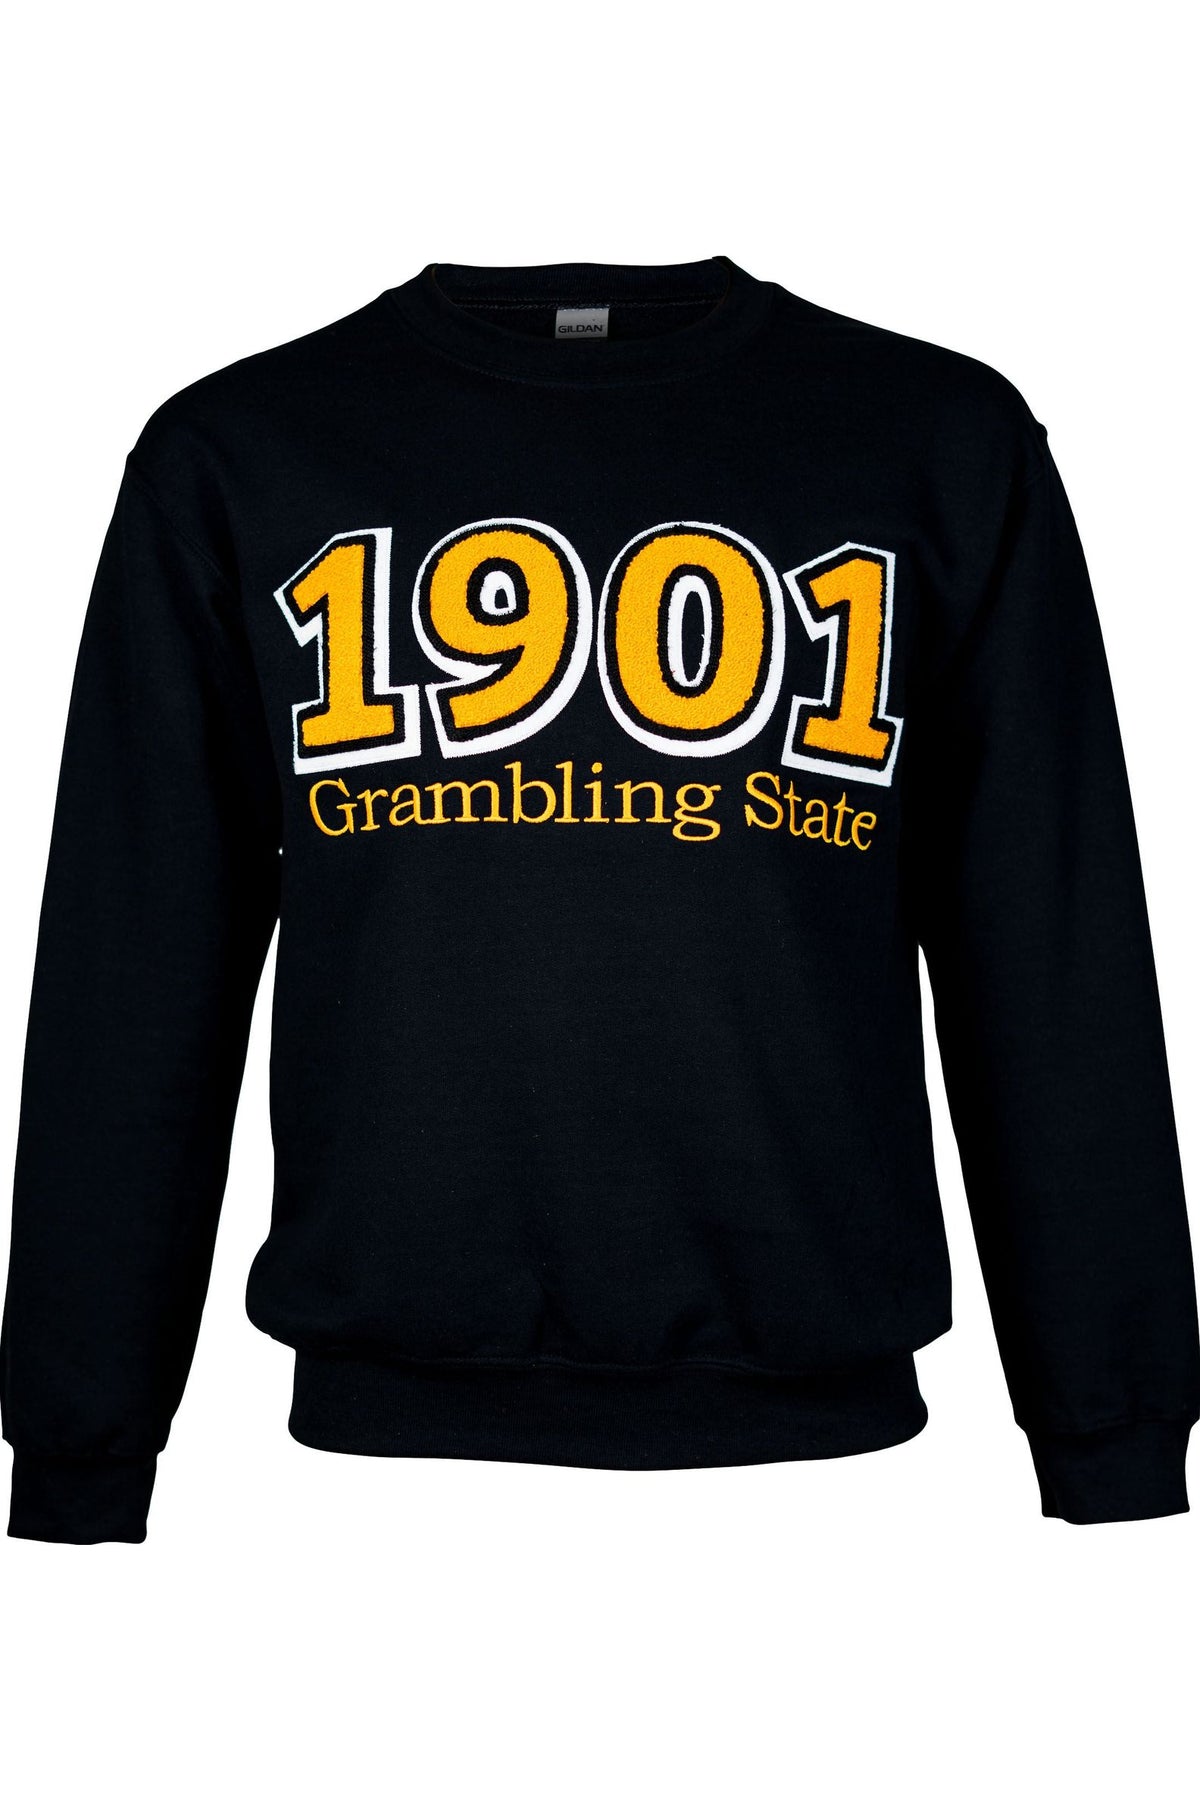 1901 Grambling State Sweatshirt (Unisex)